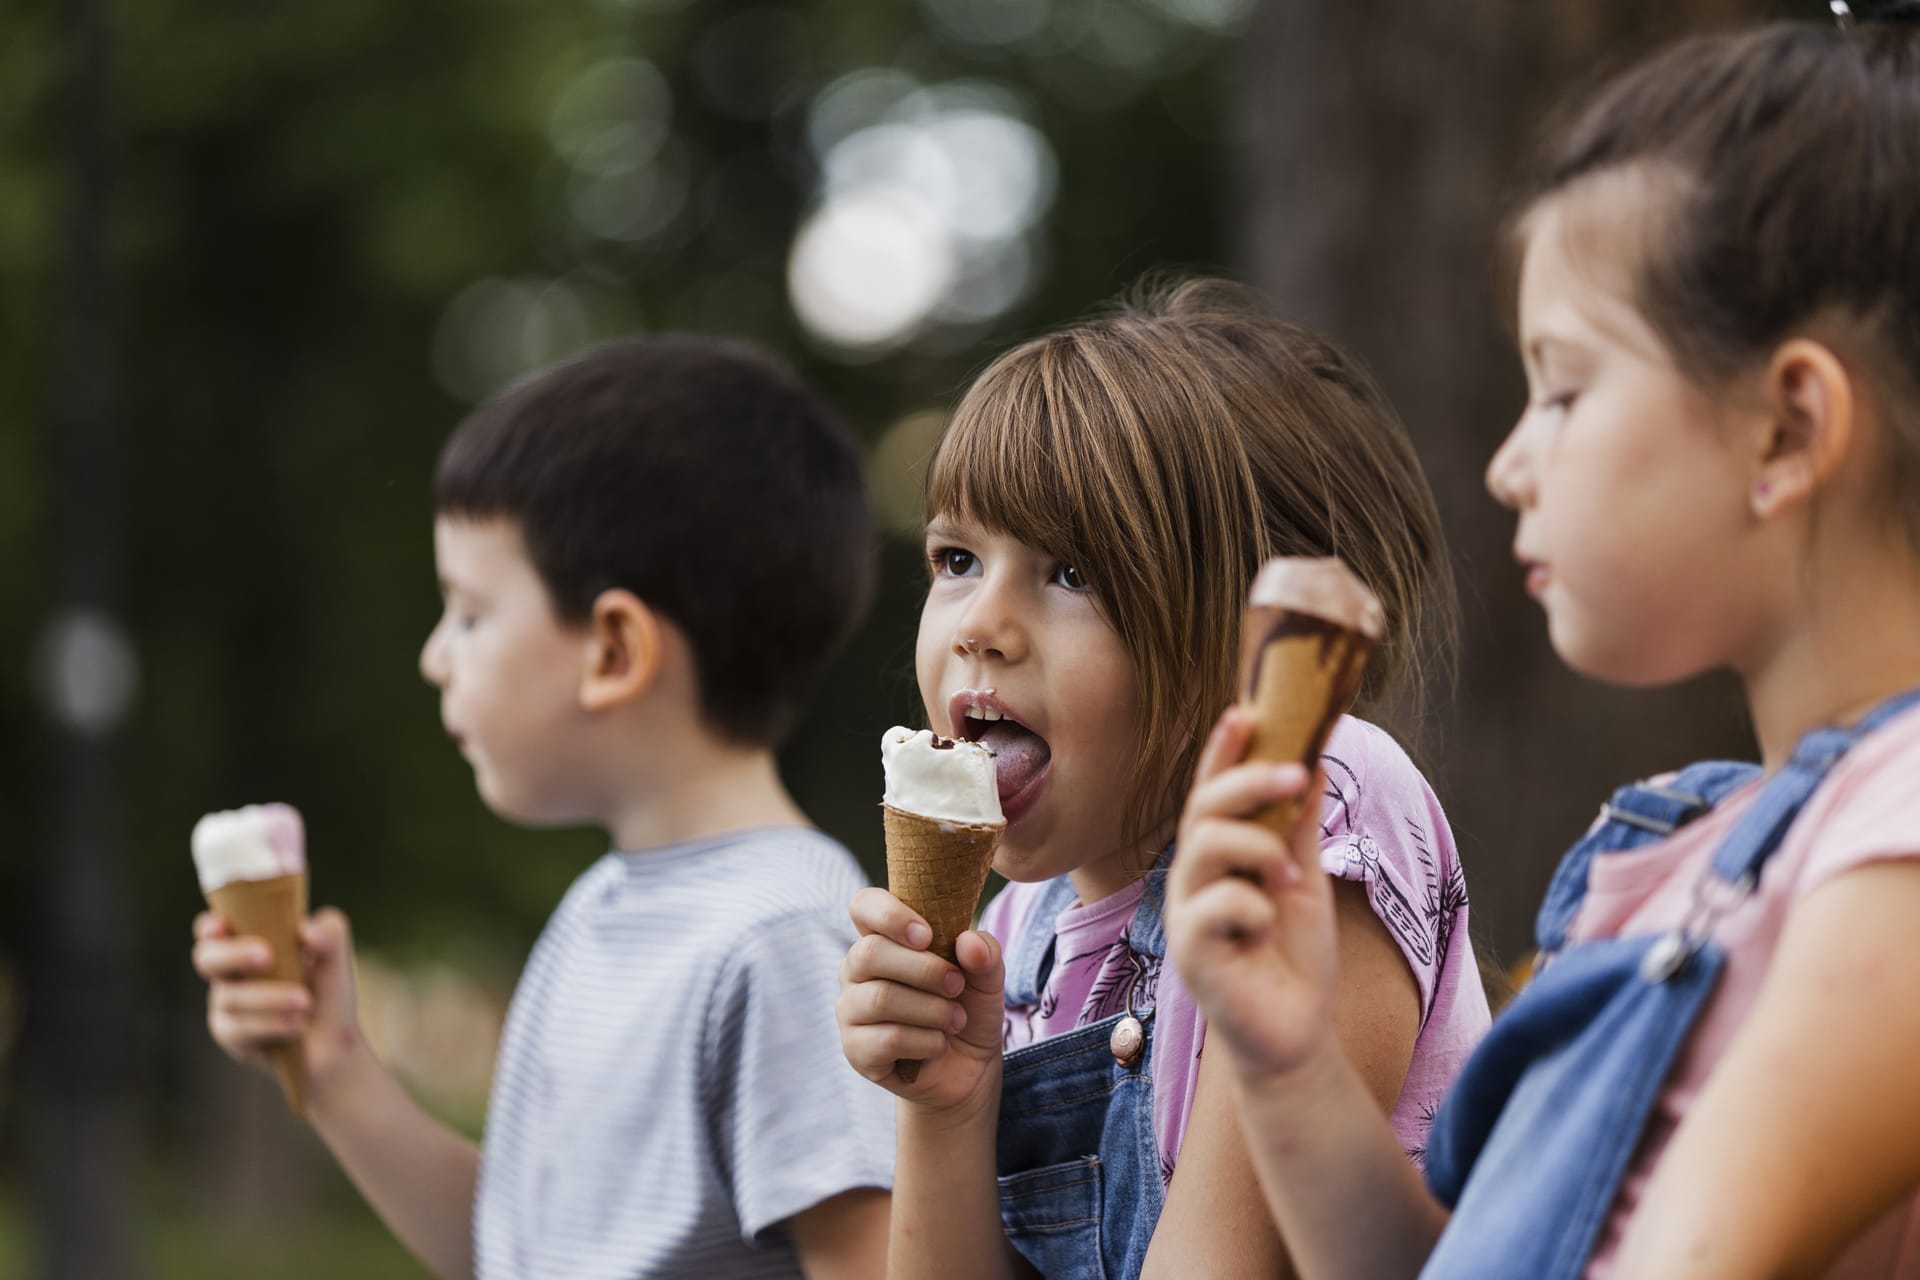 Young children enjoying ice cream outdoors